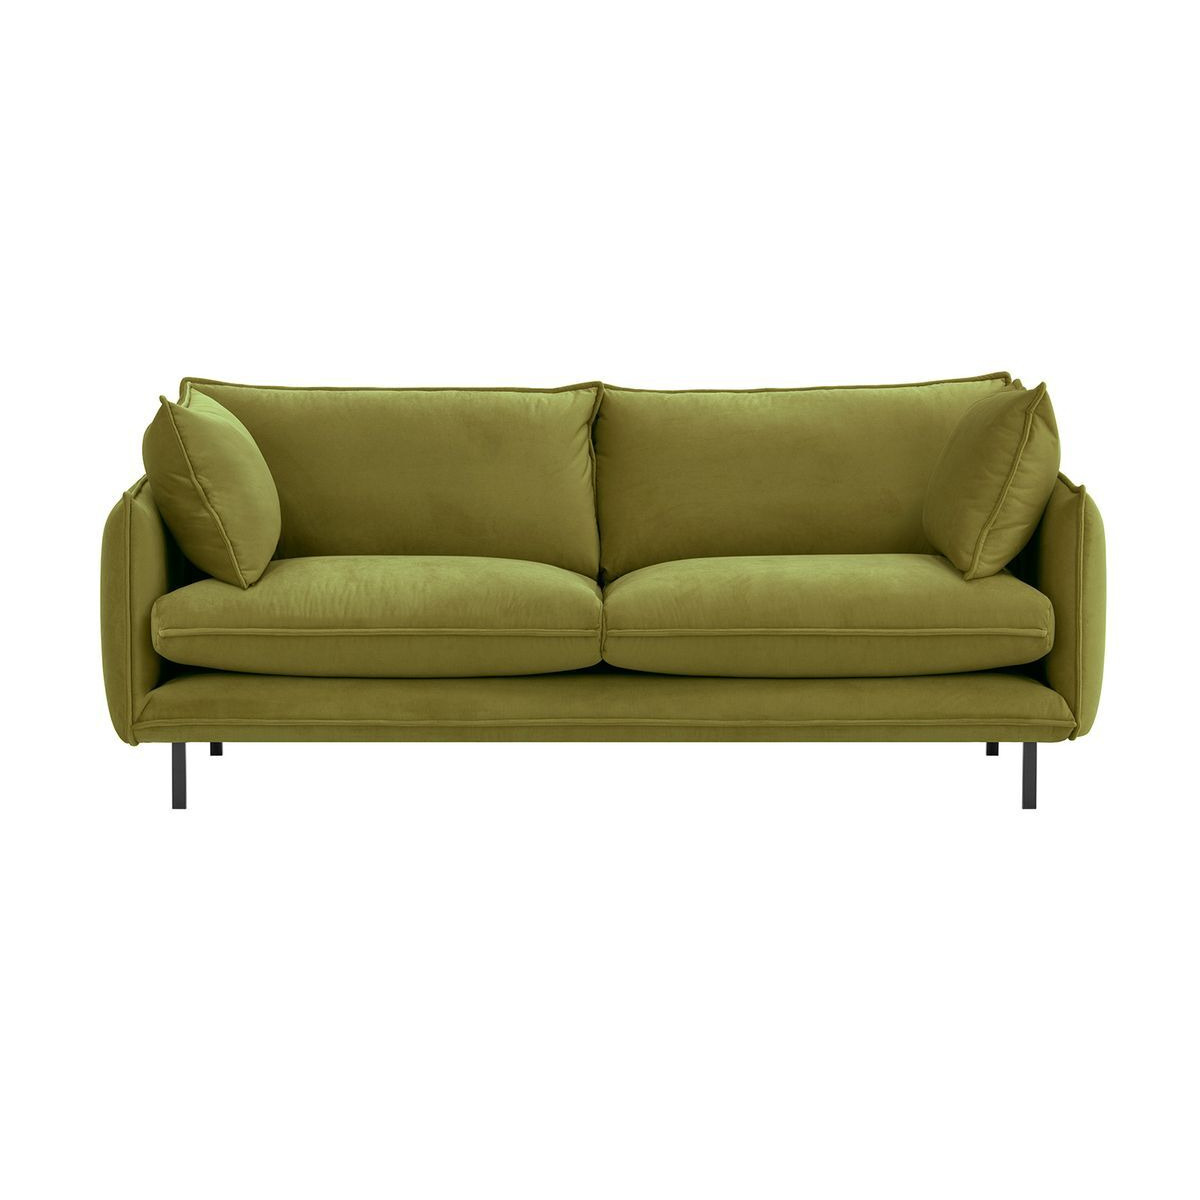 Nimbus 3 Seater Sofa, olive green - image 1